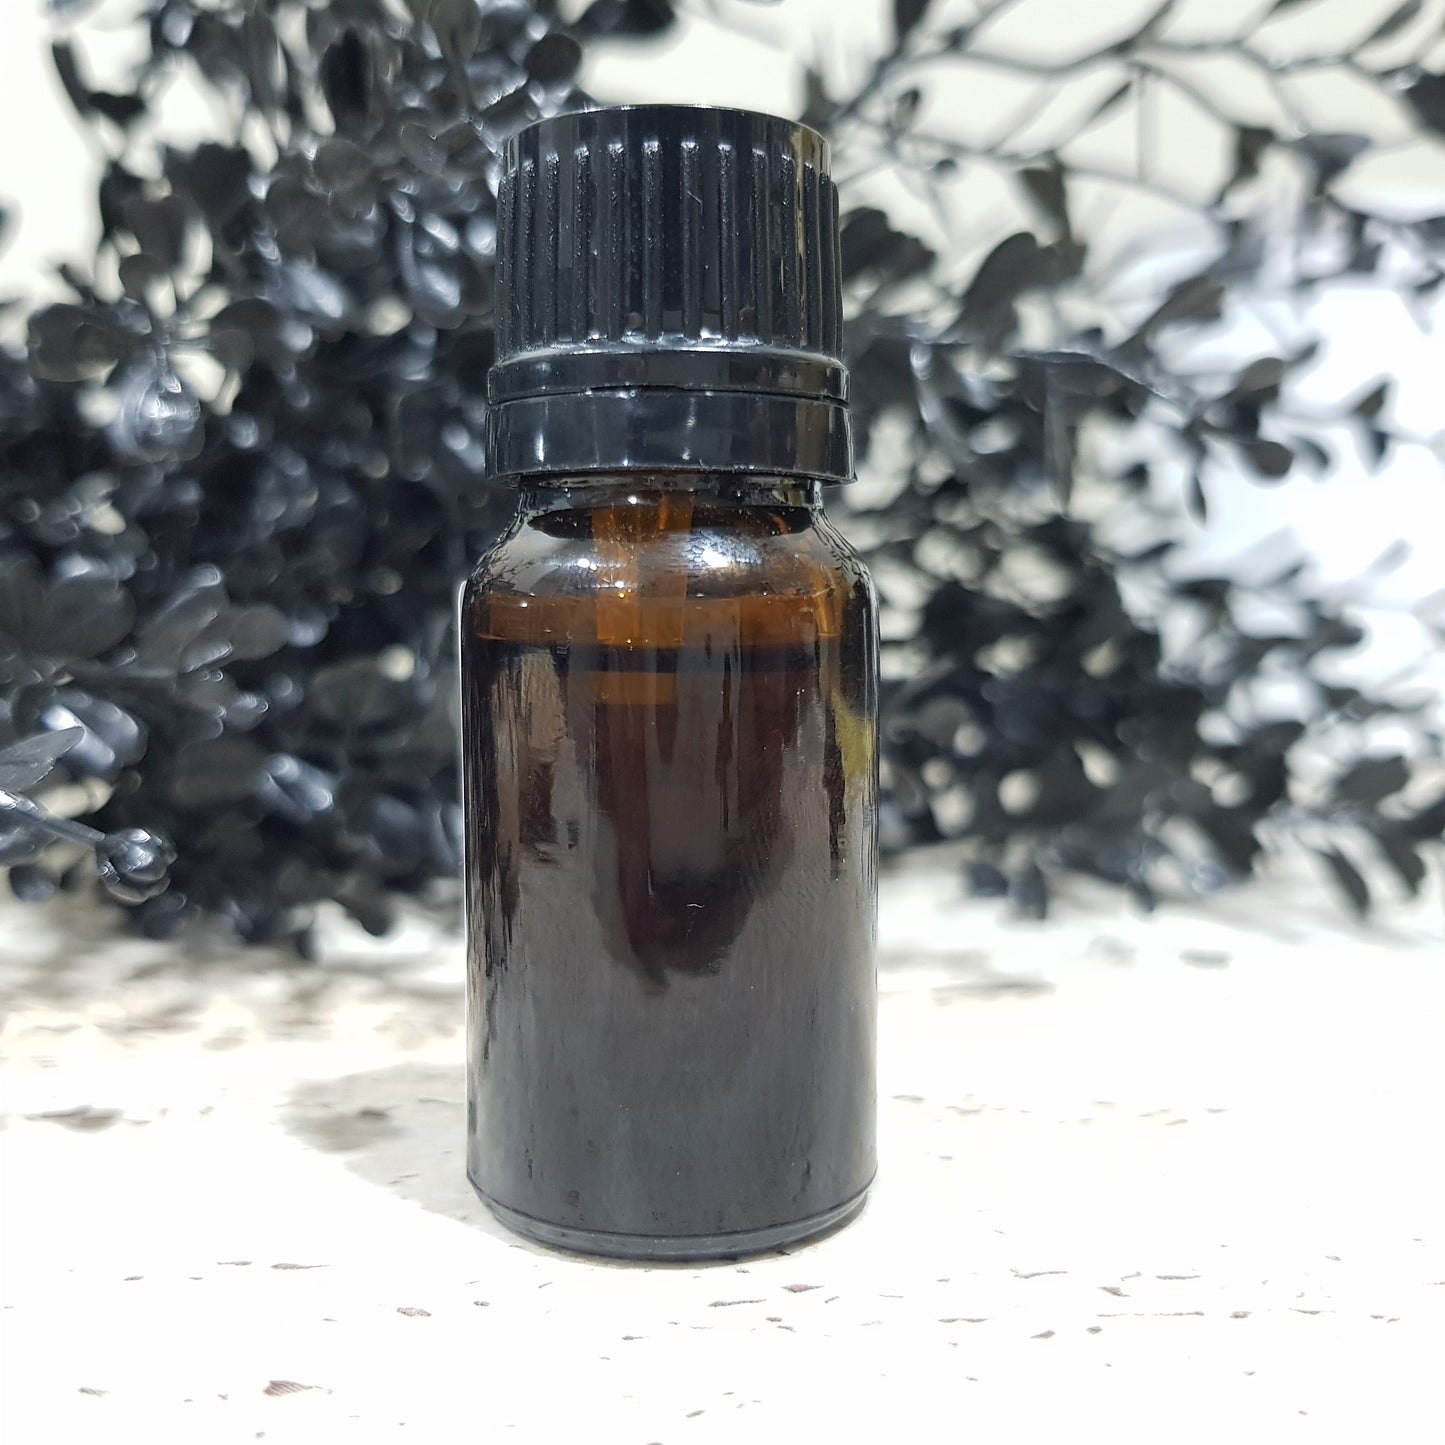 Bourbon Vanilla - 10ml Fragrance Oil